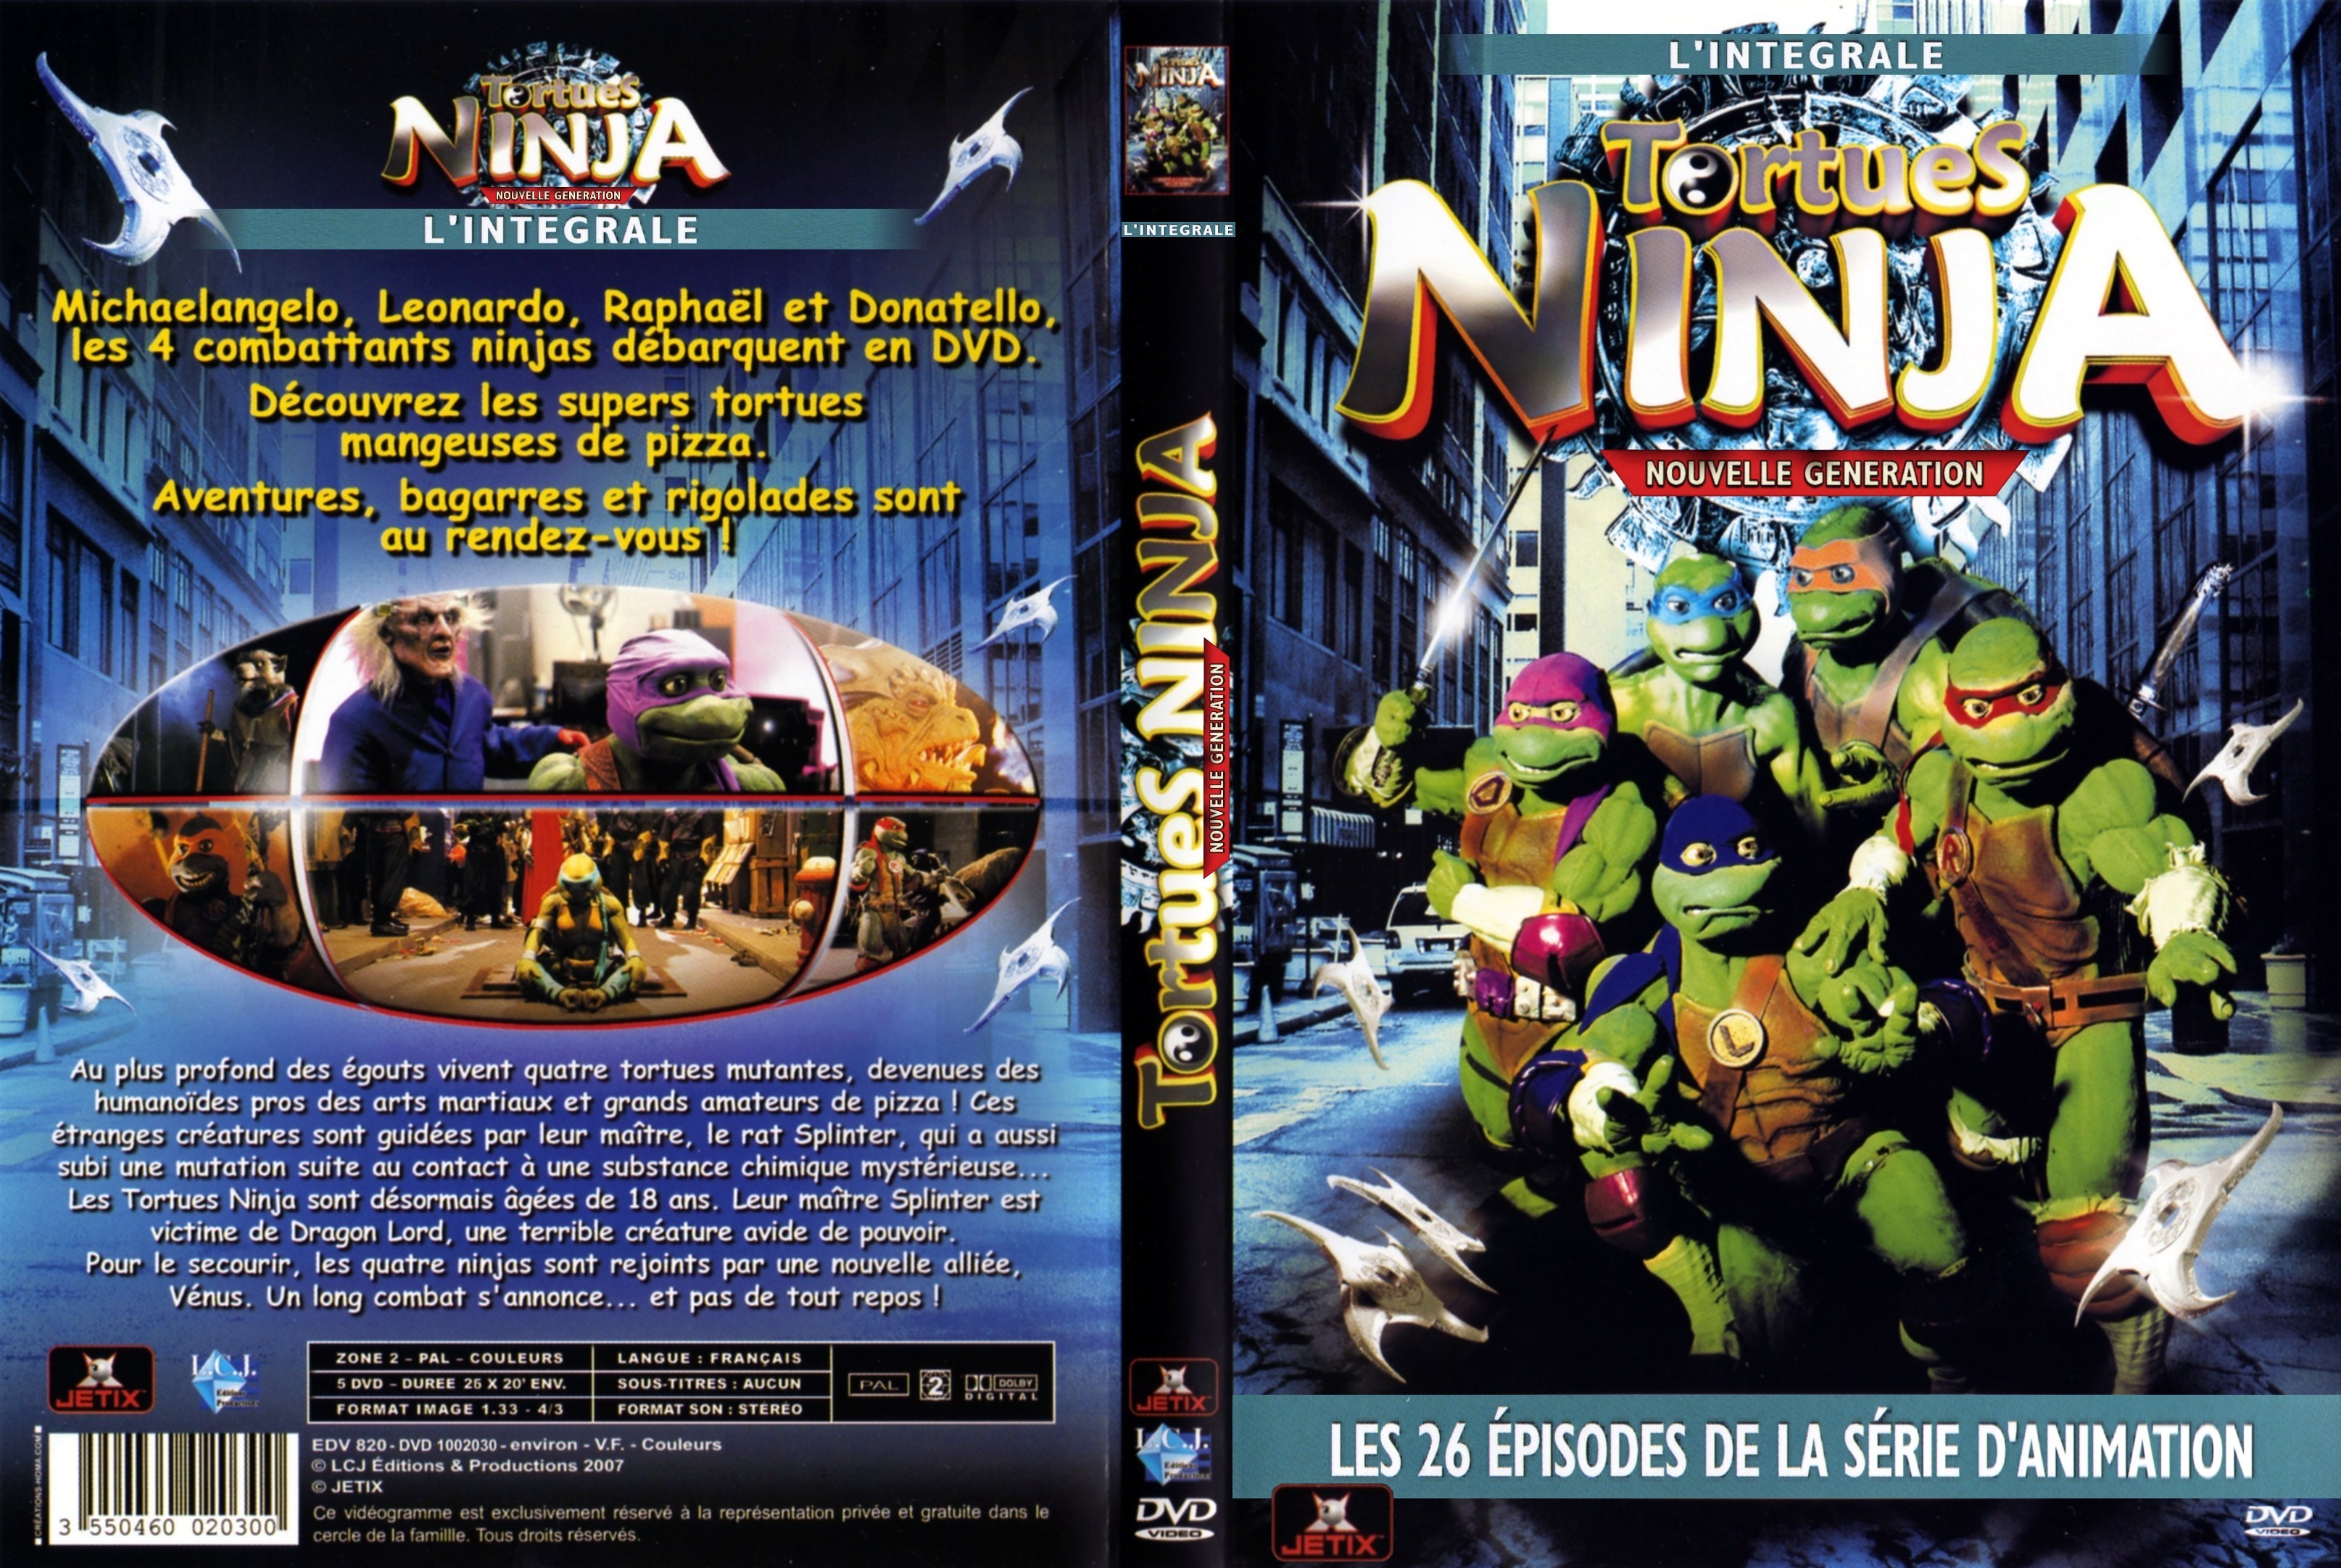 Jaquette DVD Tortues Ninja Nouvelle gnration l